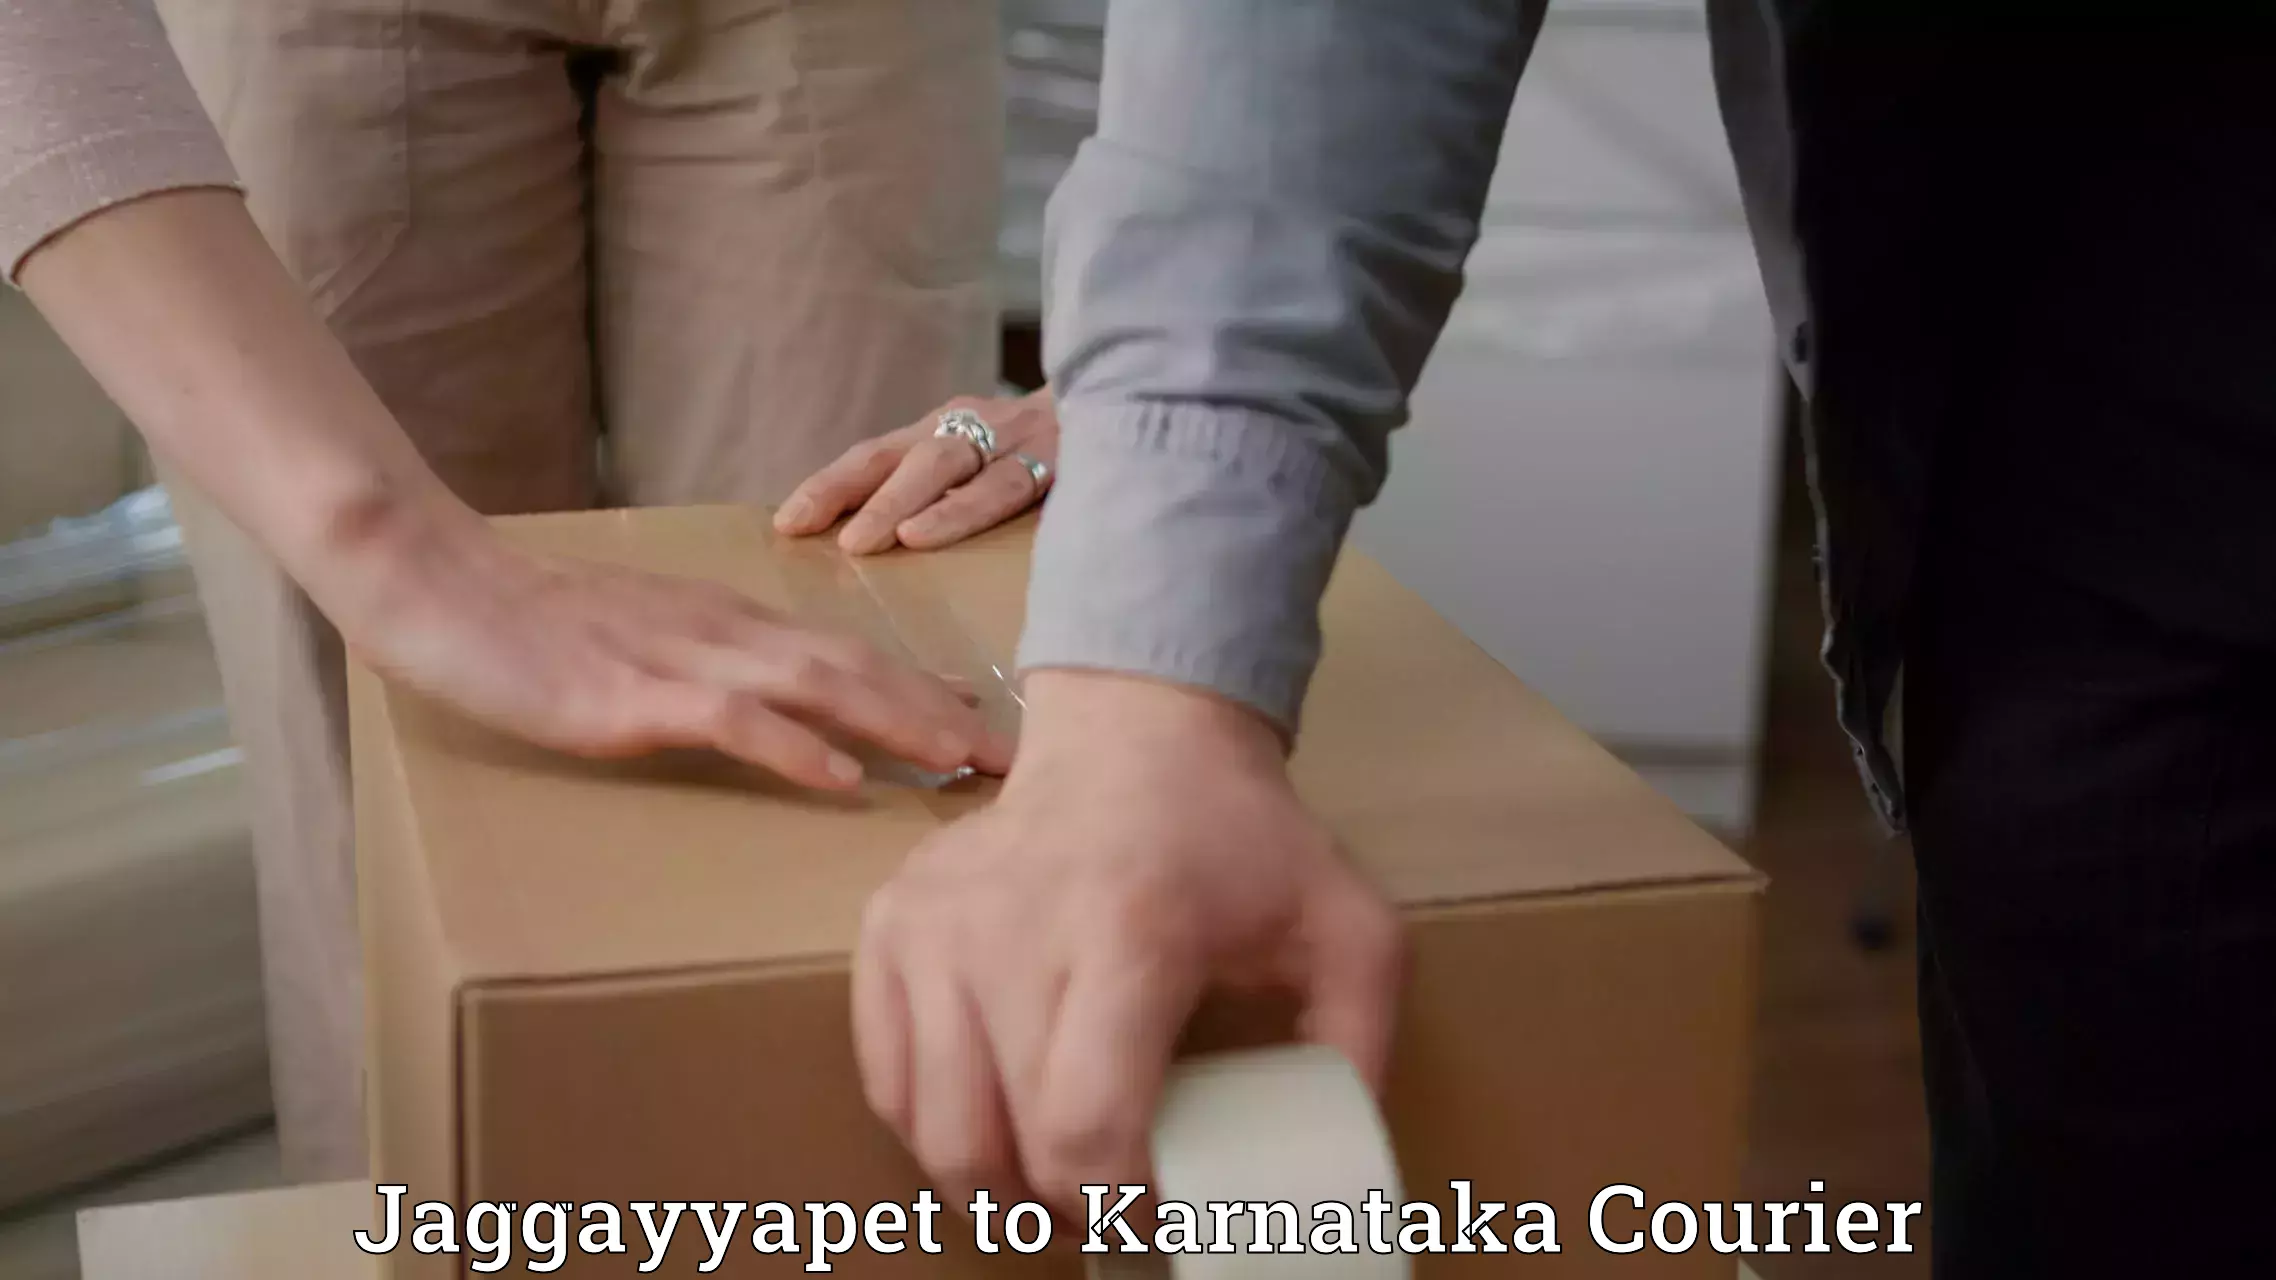 On-call courier service Jaggayyapet to Karnataka